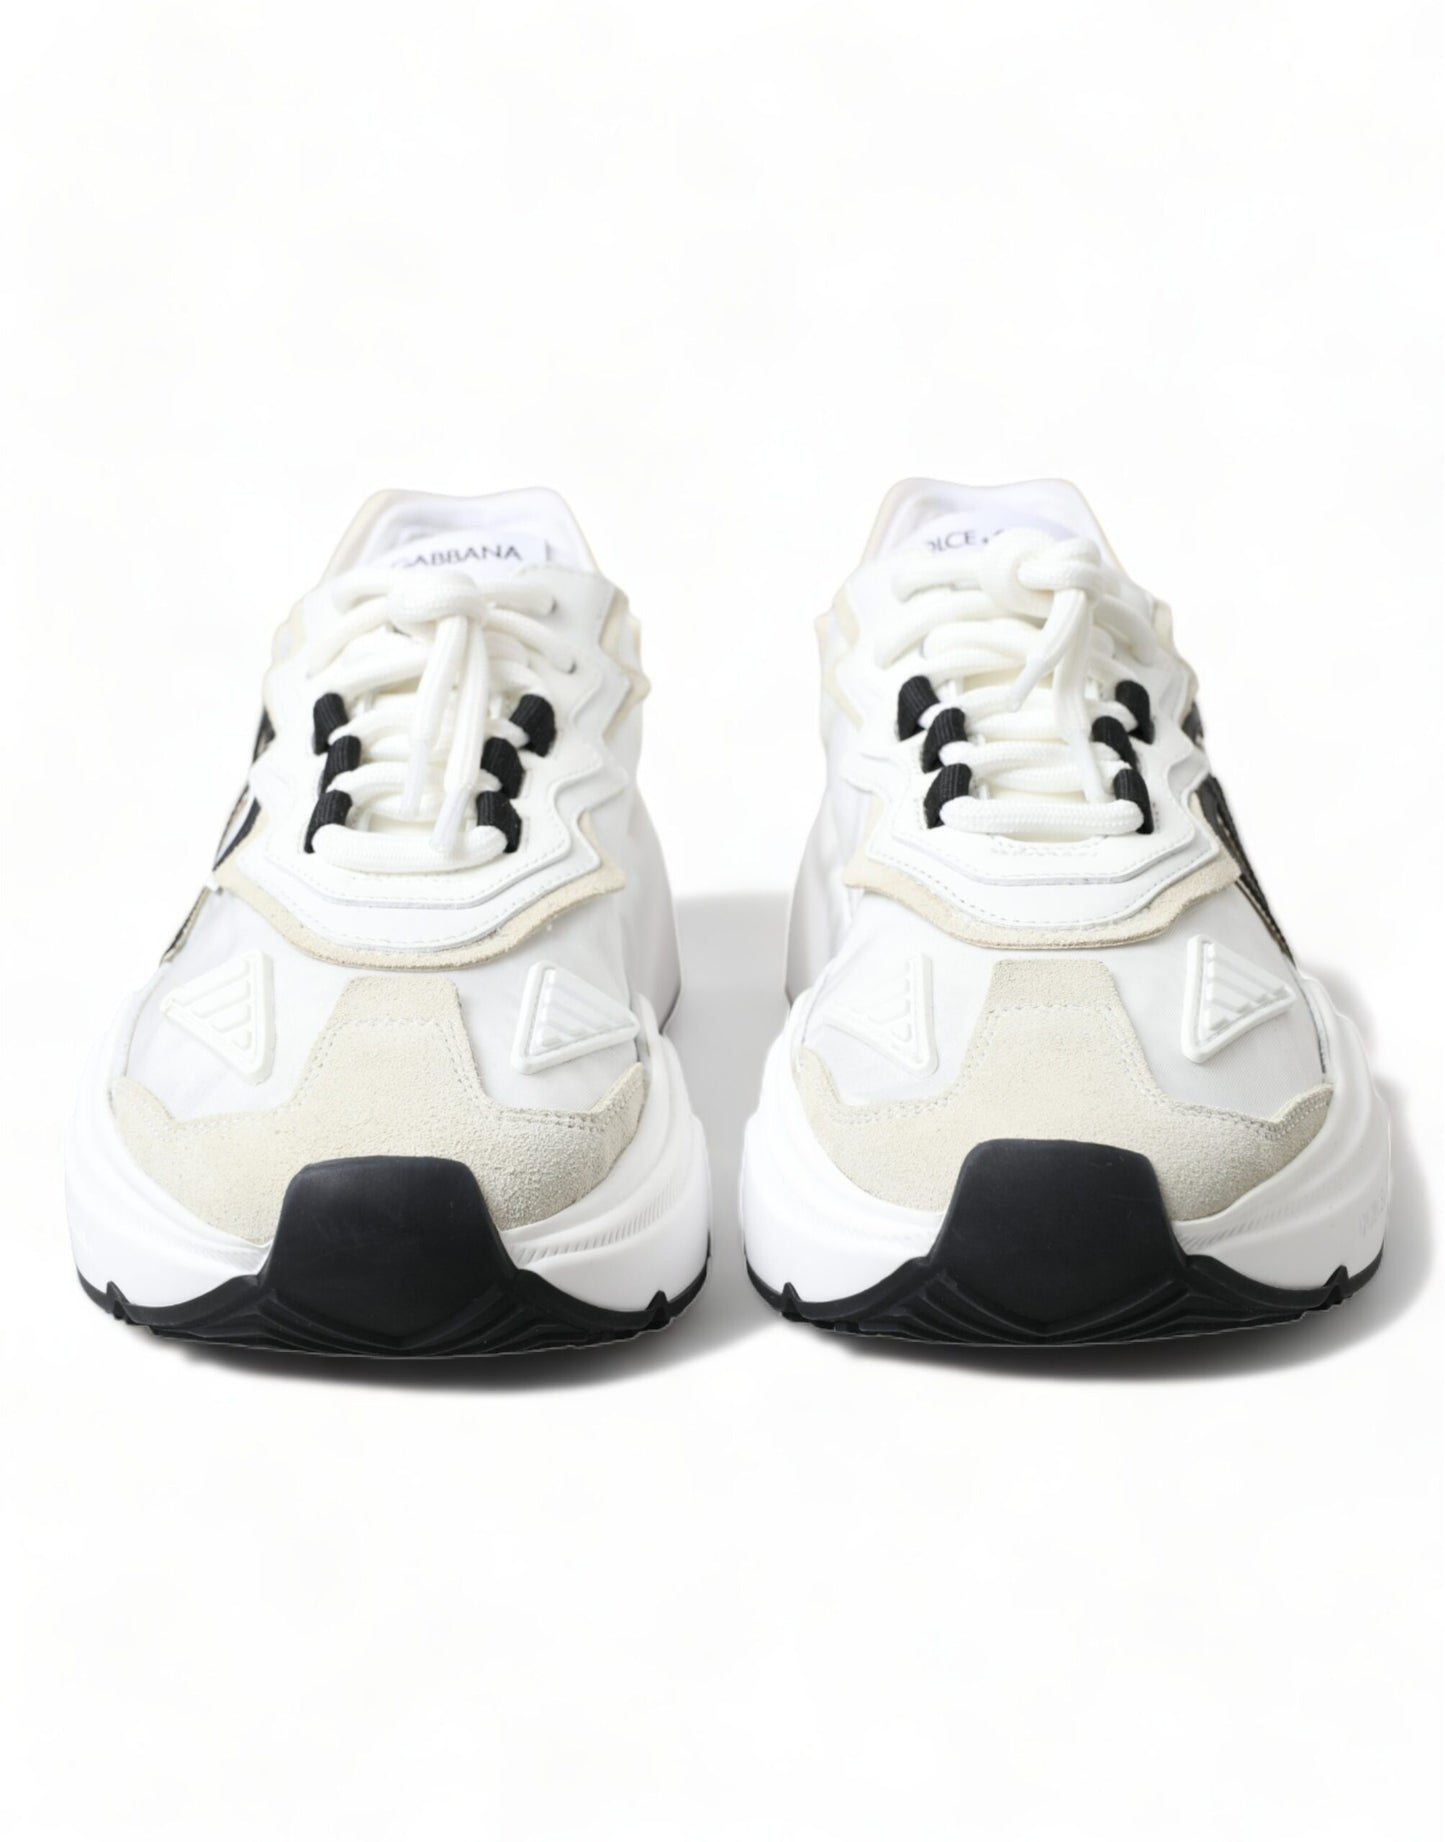 Dolce & Gabbana Daymaster Chic White Nylon Sneakers